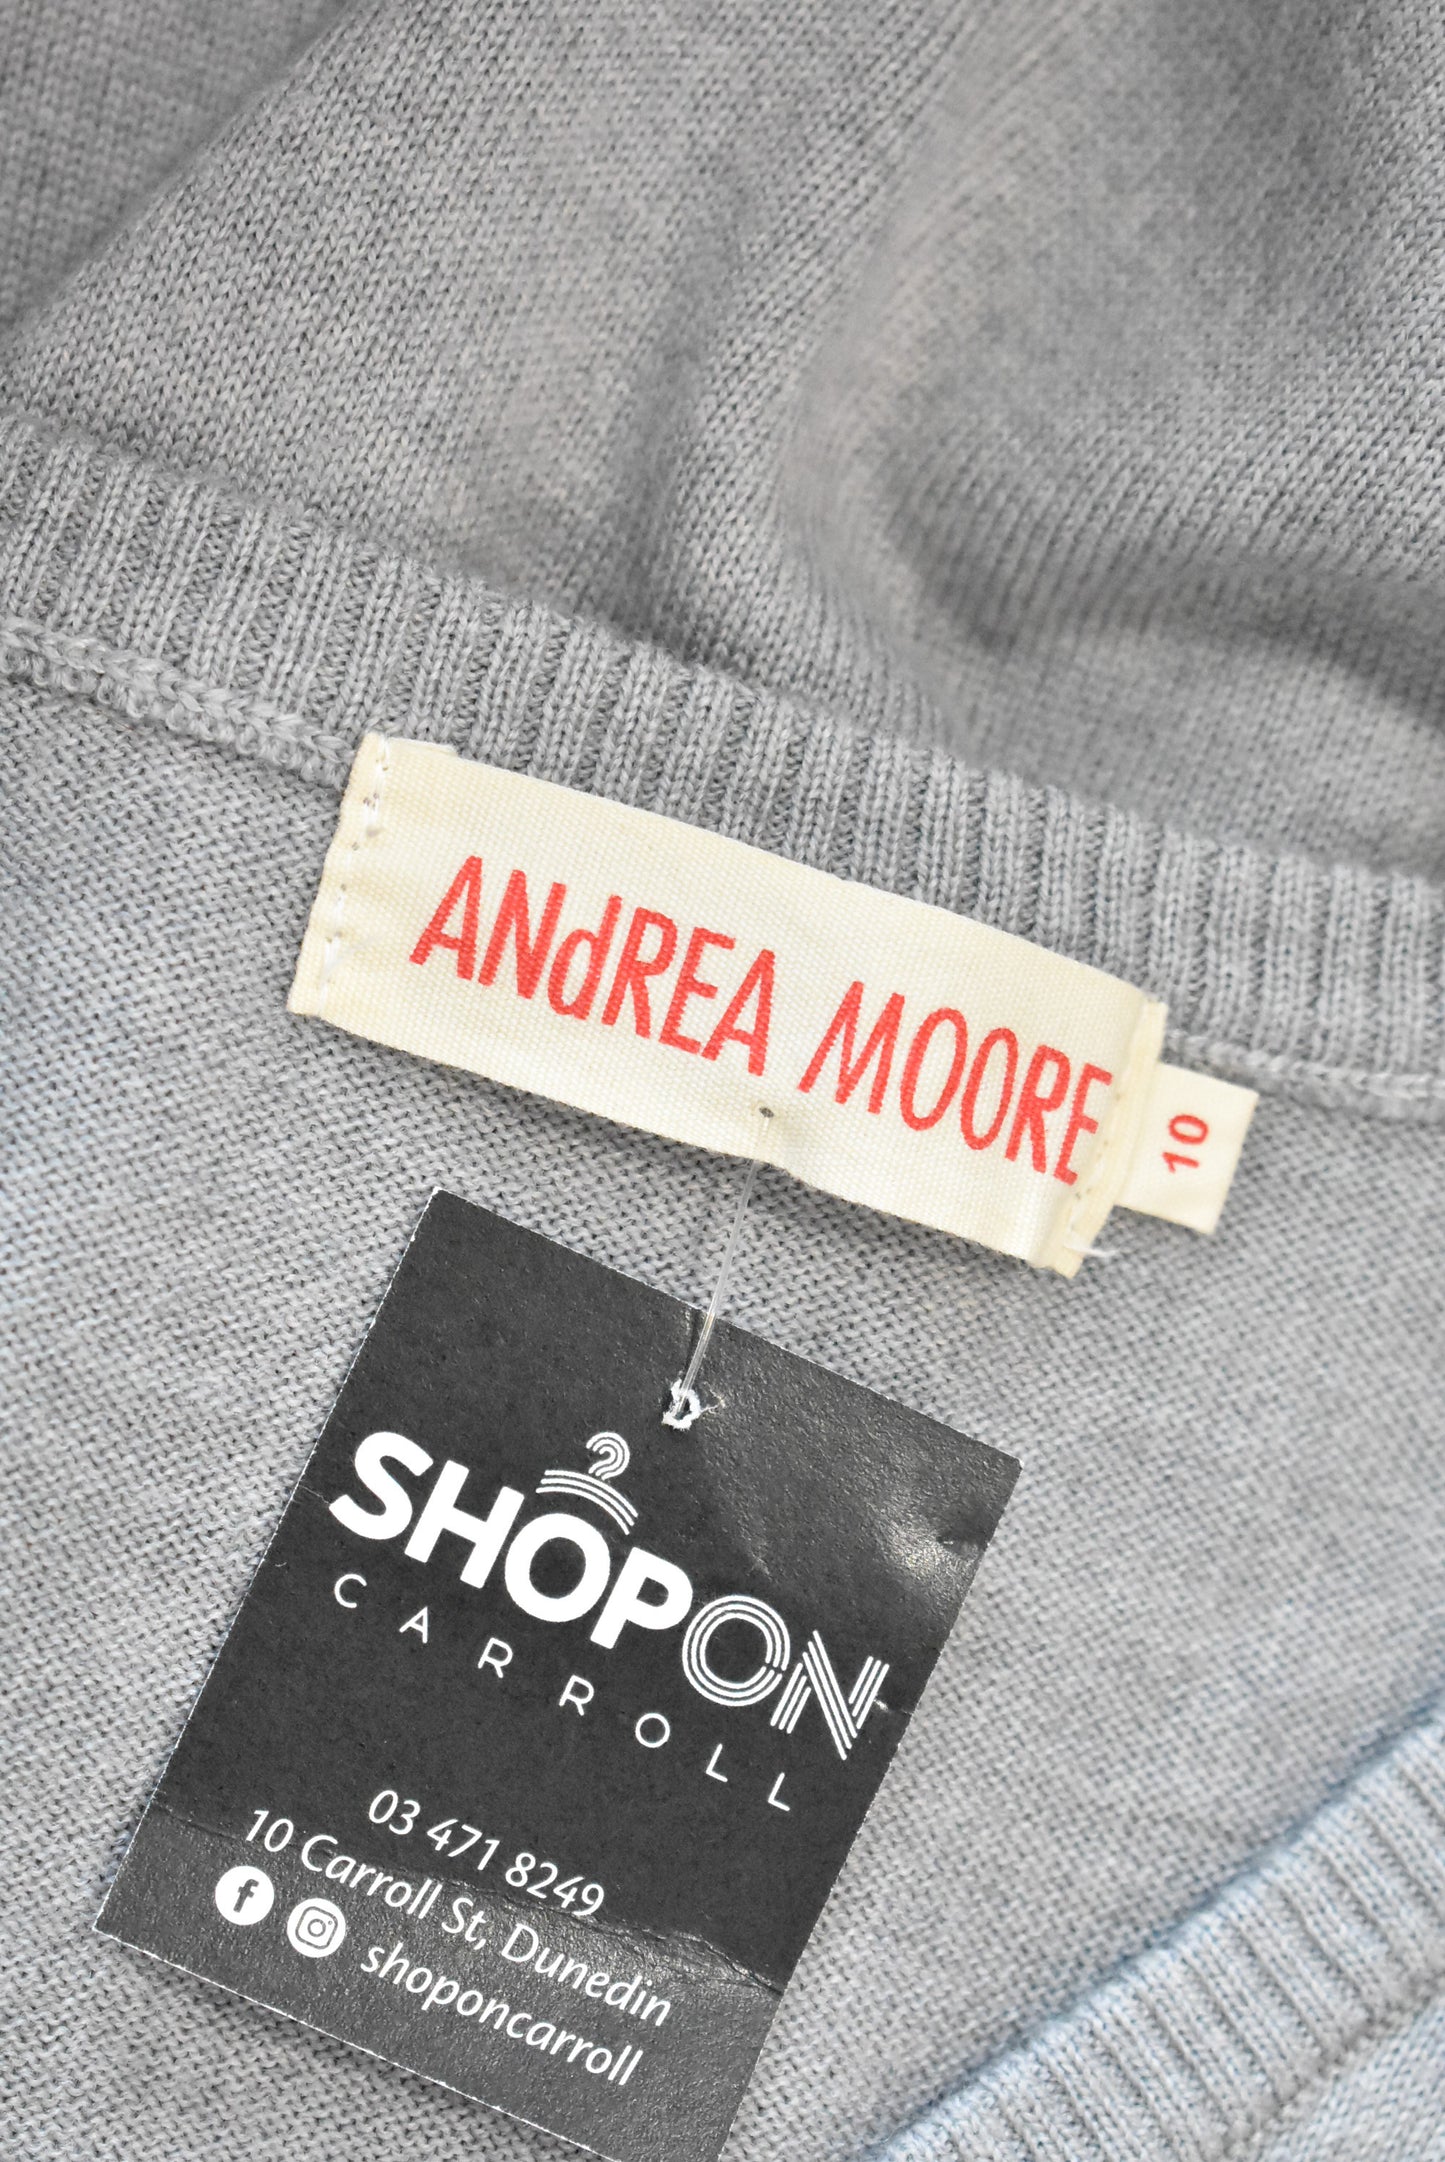 Andrea Moore merino wool jersey, 10